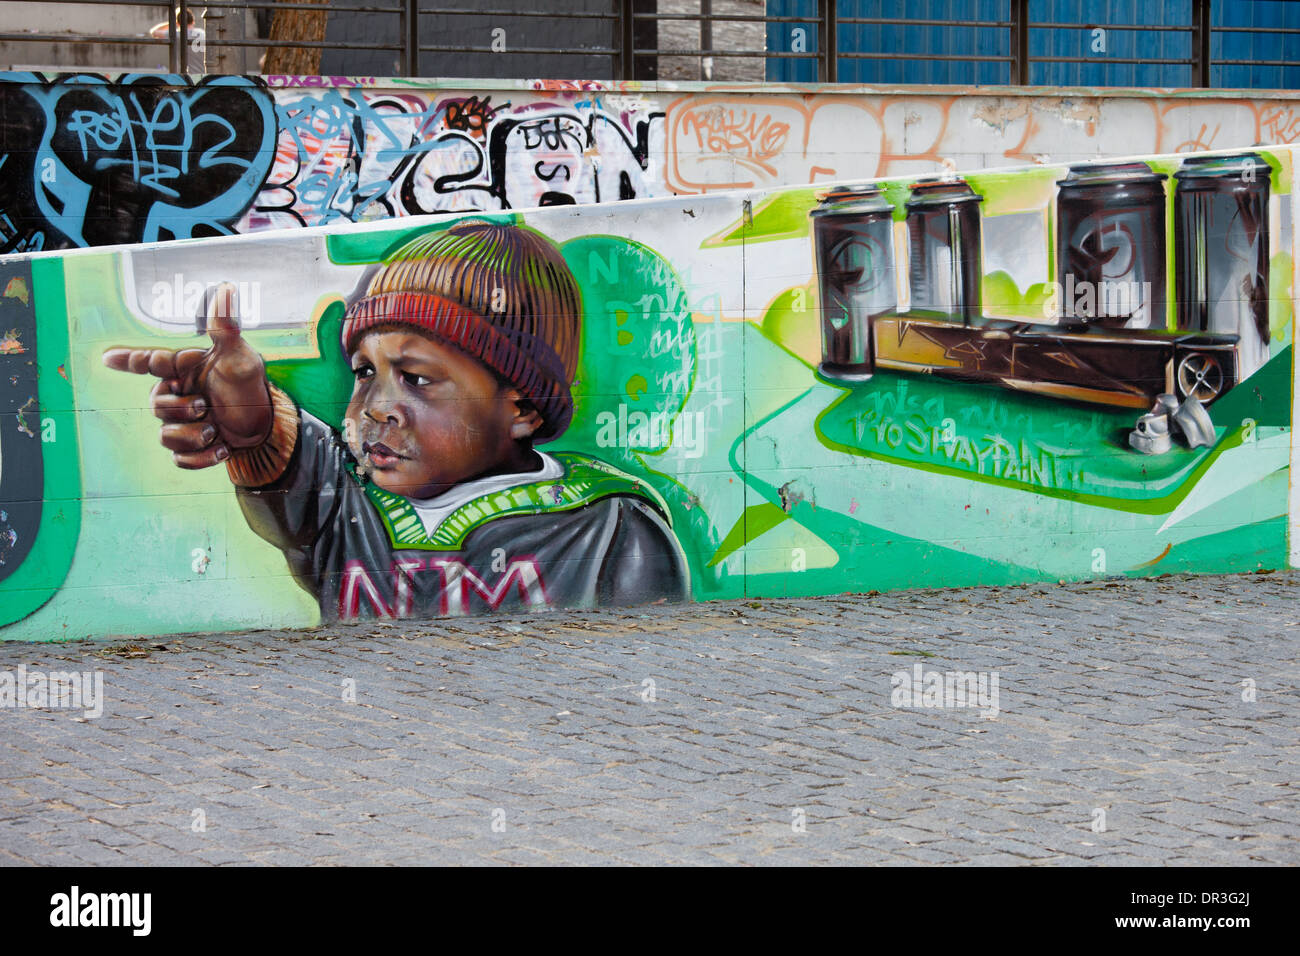 Black kid with finger gun hand gesture, mural in Seville, Spain. Stock Photo